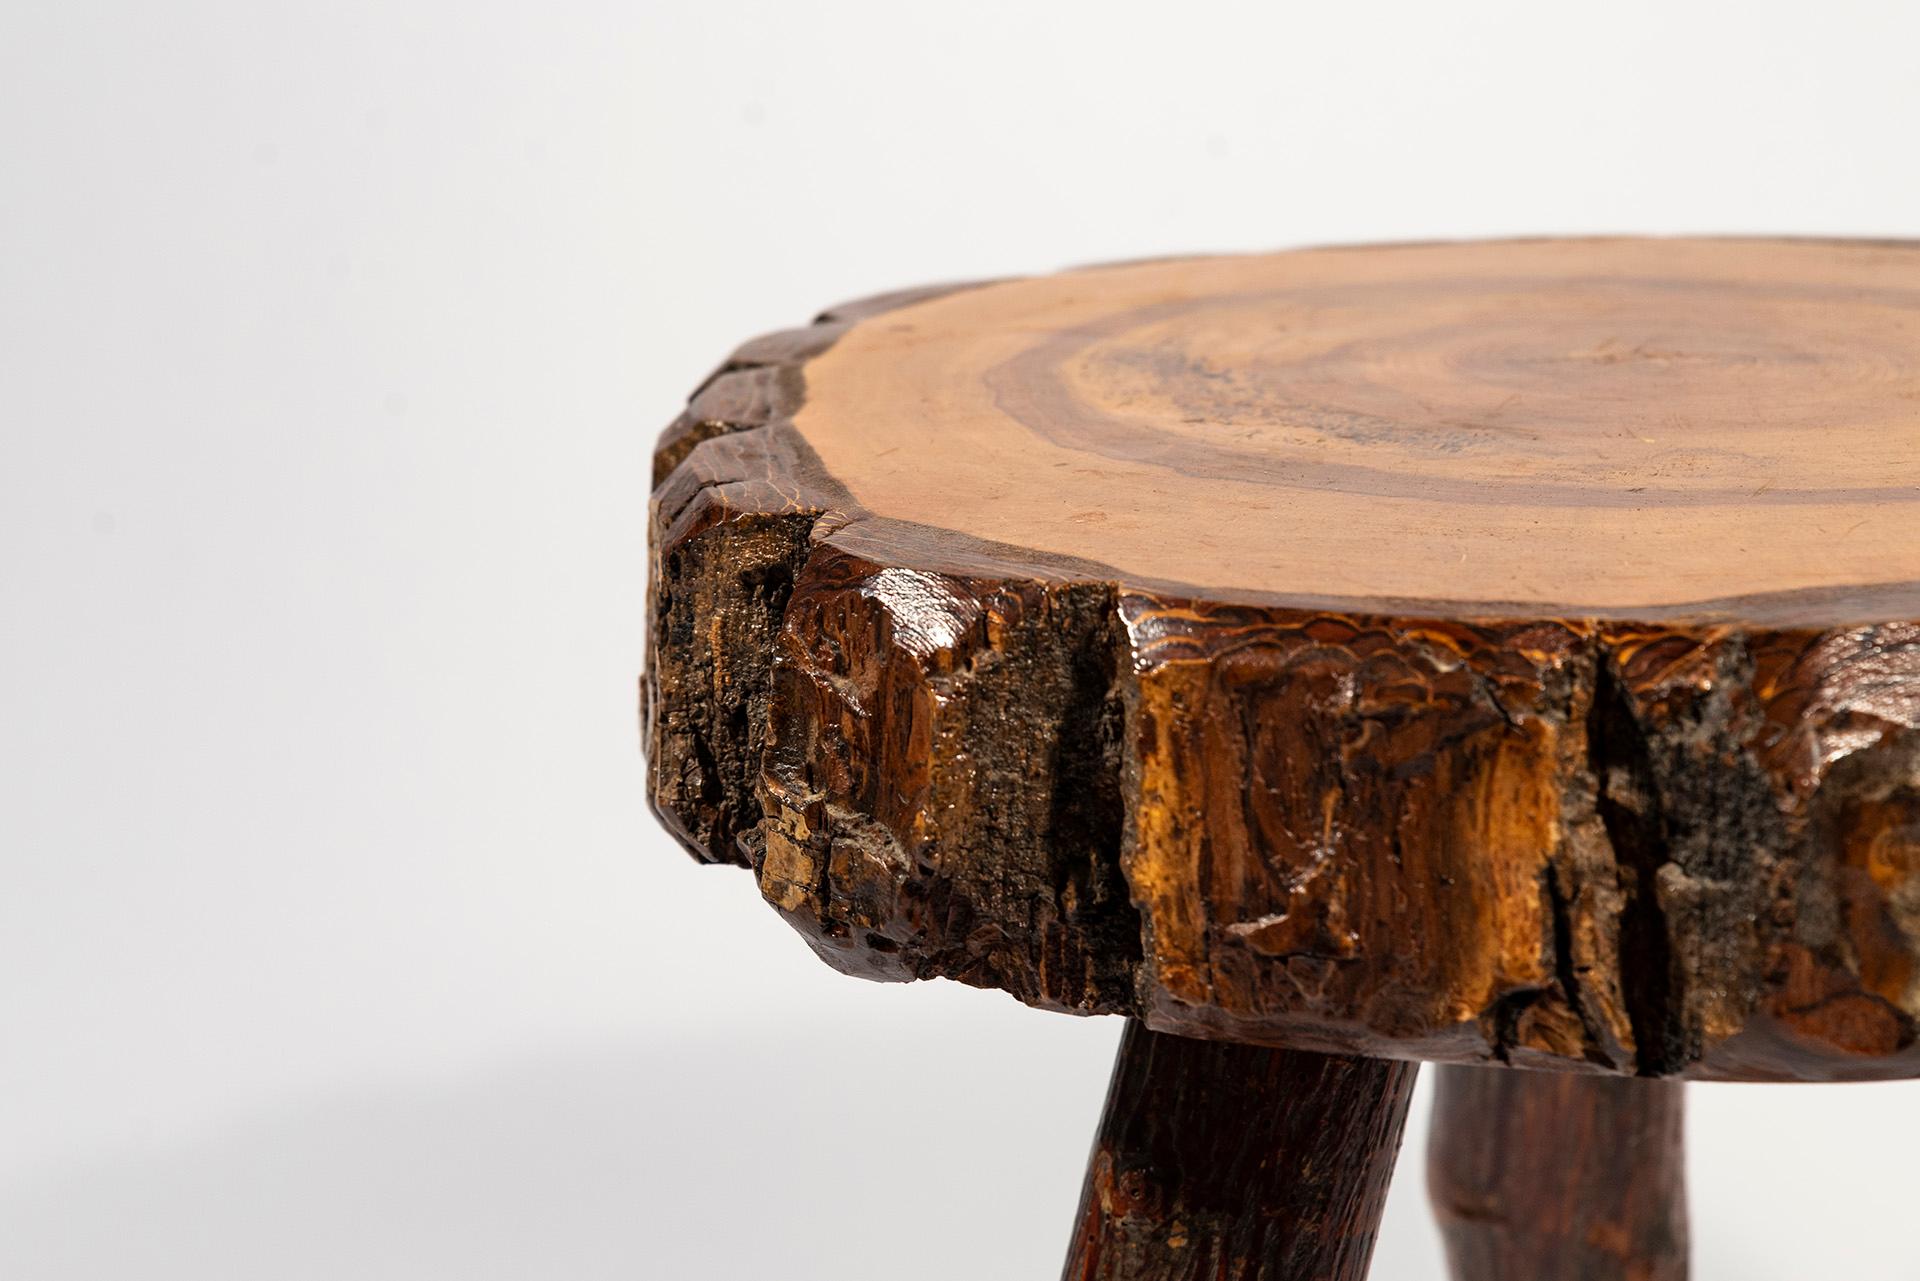 Pair of stools, 
wood, 
France, circa 1970. 
Measures: 1/ height 43 cm, diameter 40 cm.
2/ height 43 cm, diameter 39 cm.